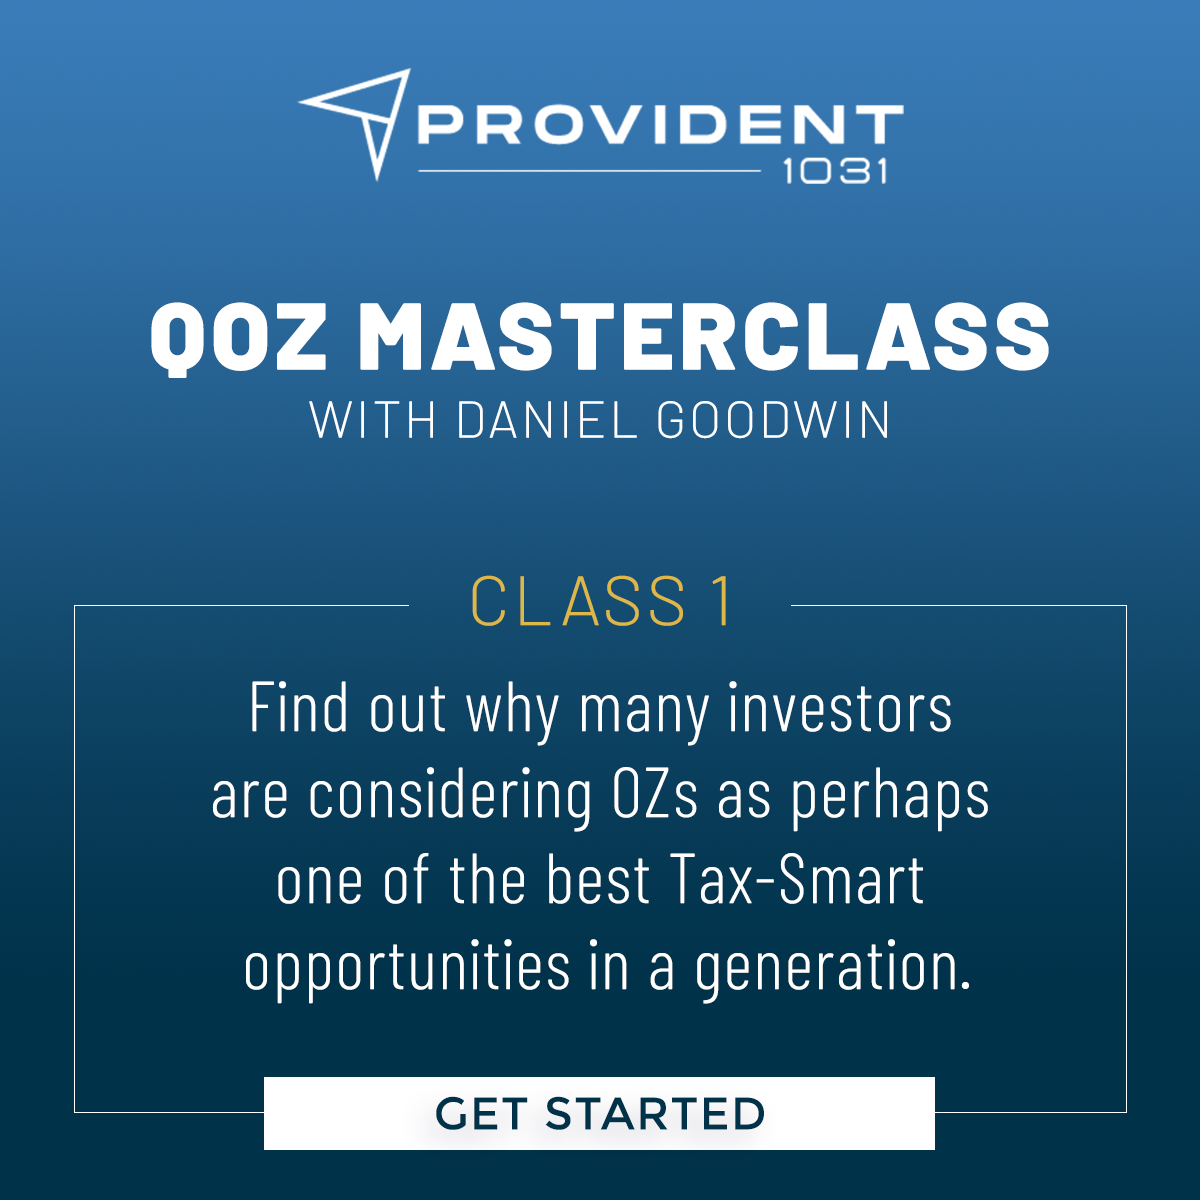 QOZ Masterclass by Daniel Goodwin of Provident 1031